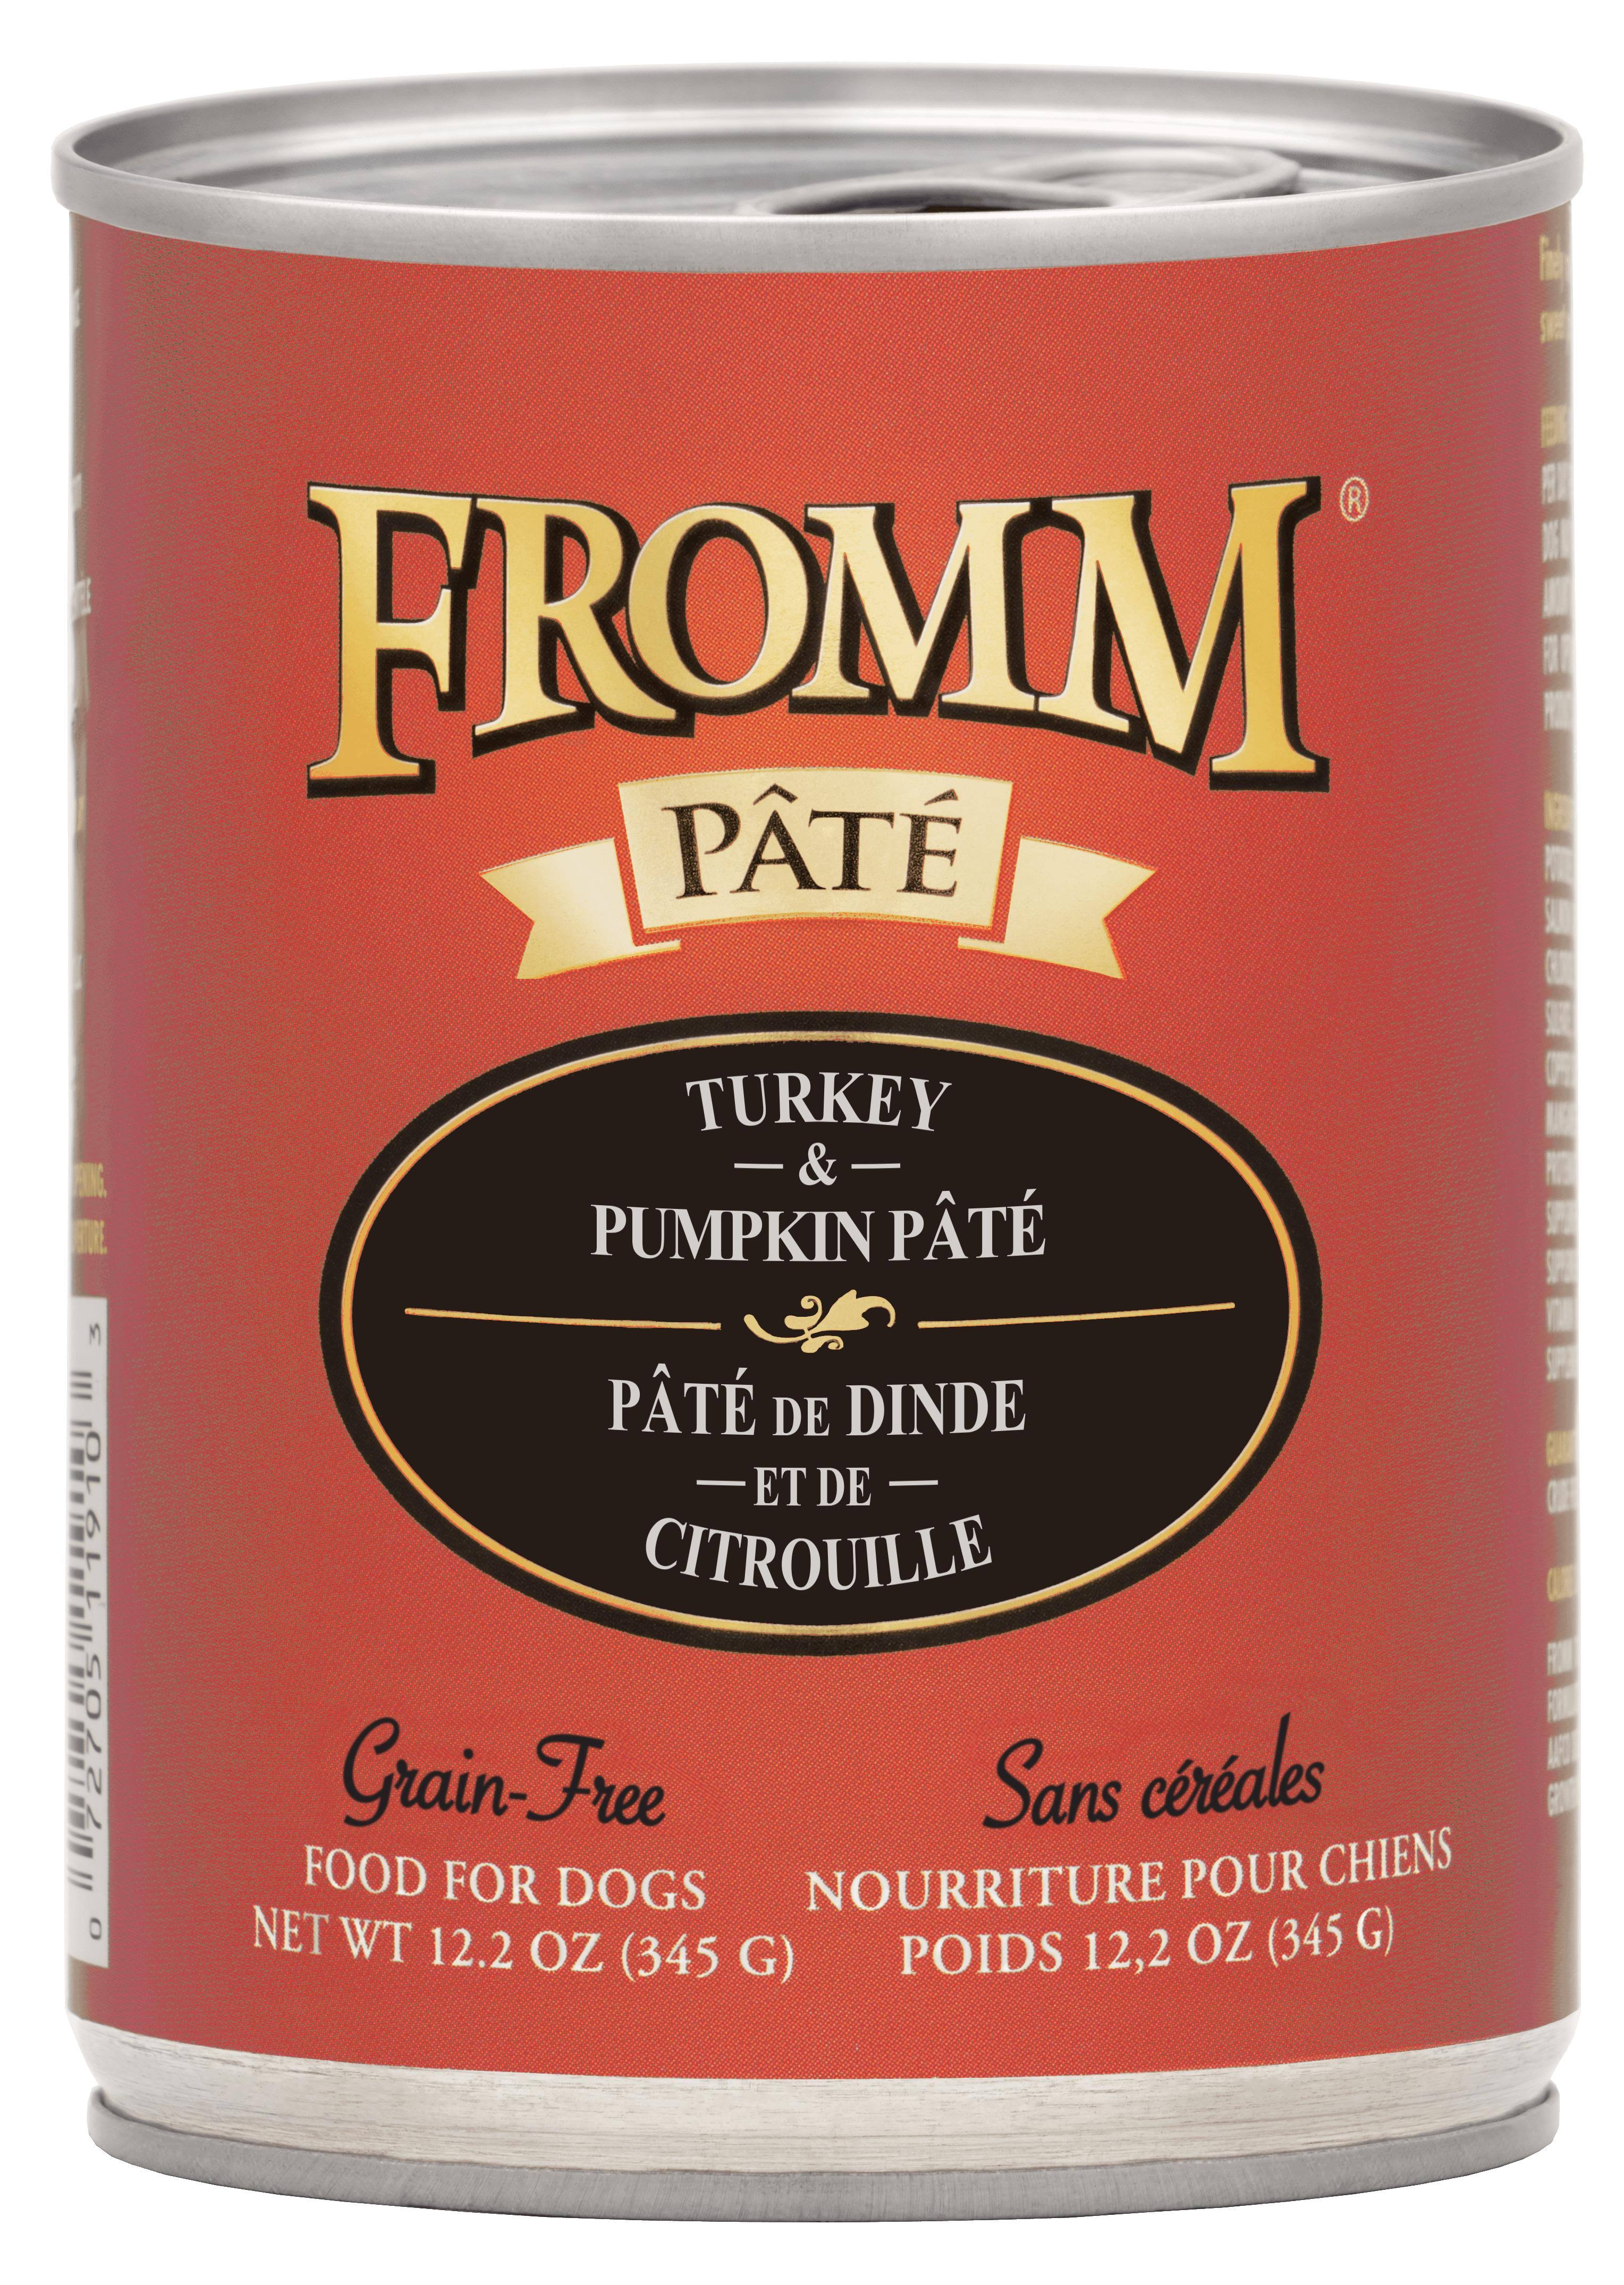 Fromm Grain-Free Turkey & Pumpkin Pate Dog Food 12.2oz